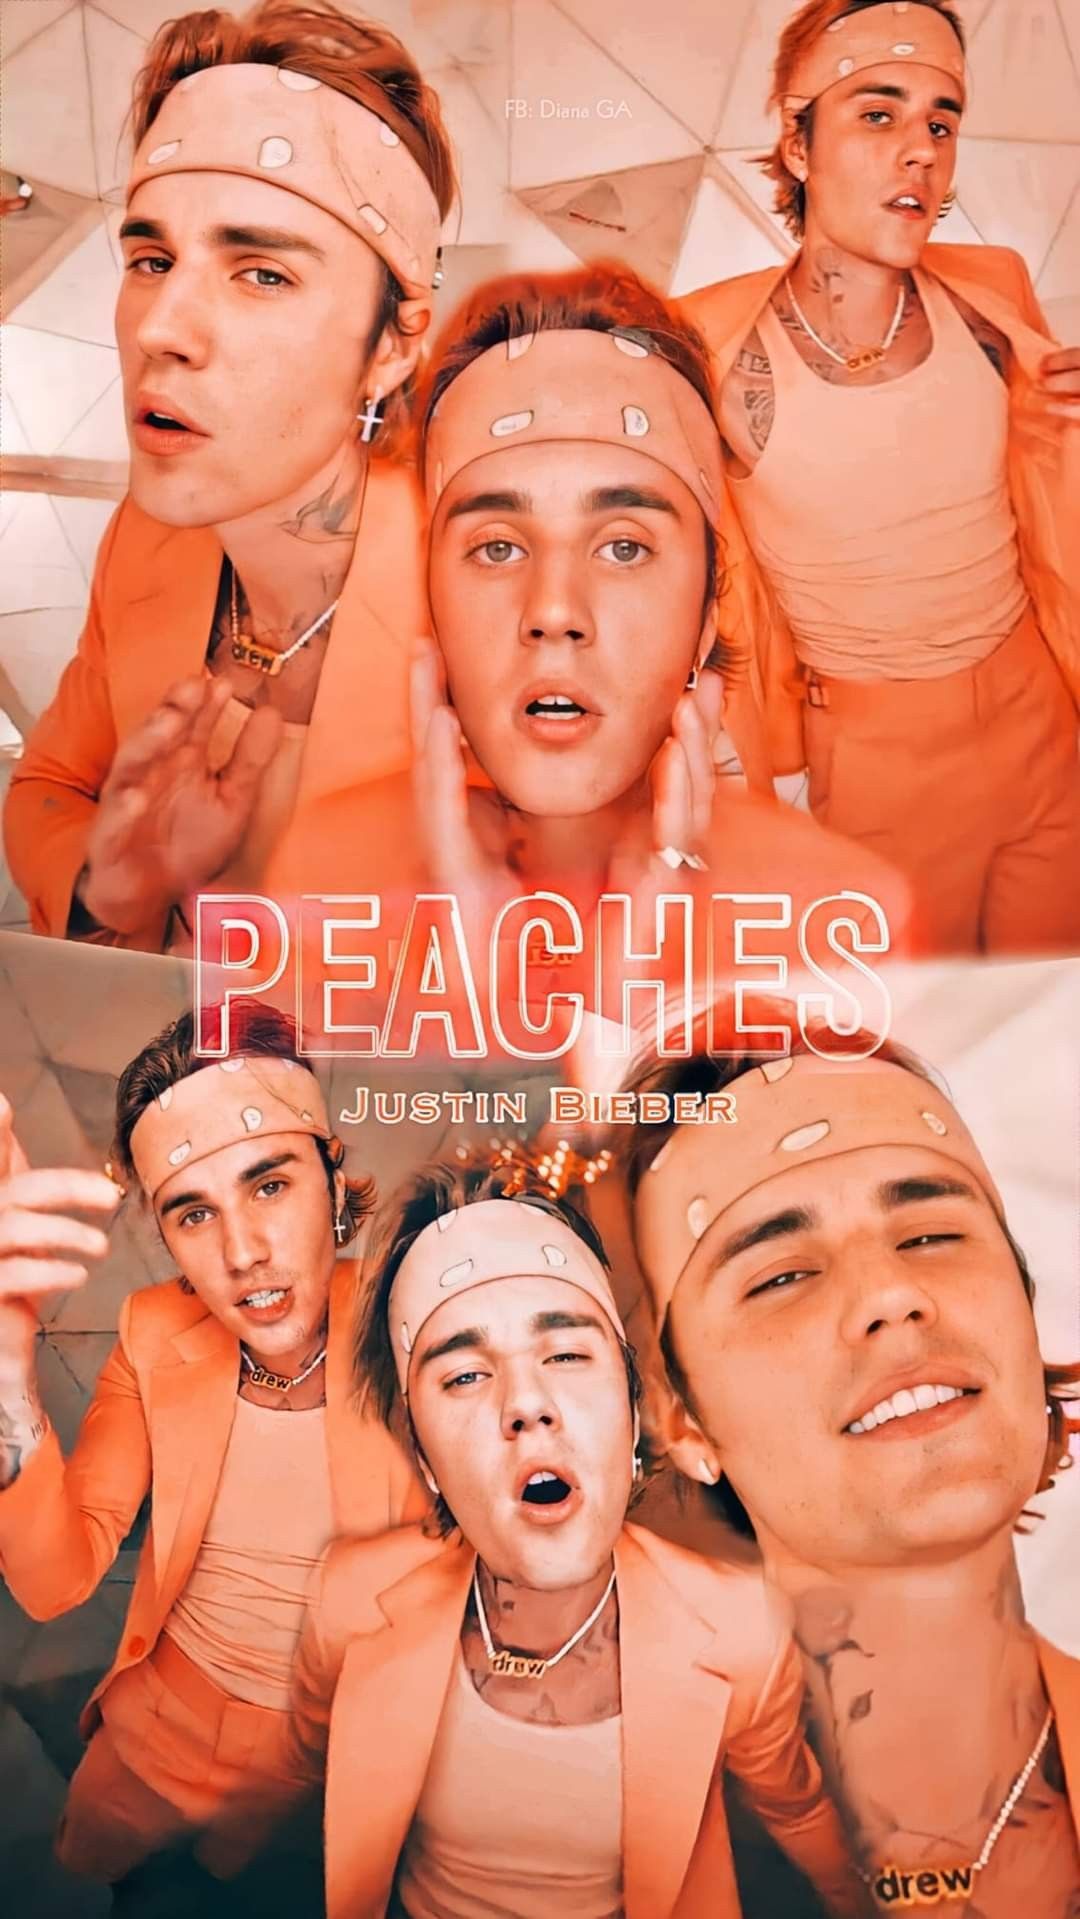 Justin Bieber - Peaches, Tradução